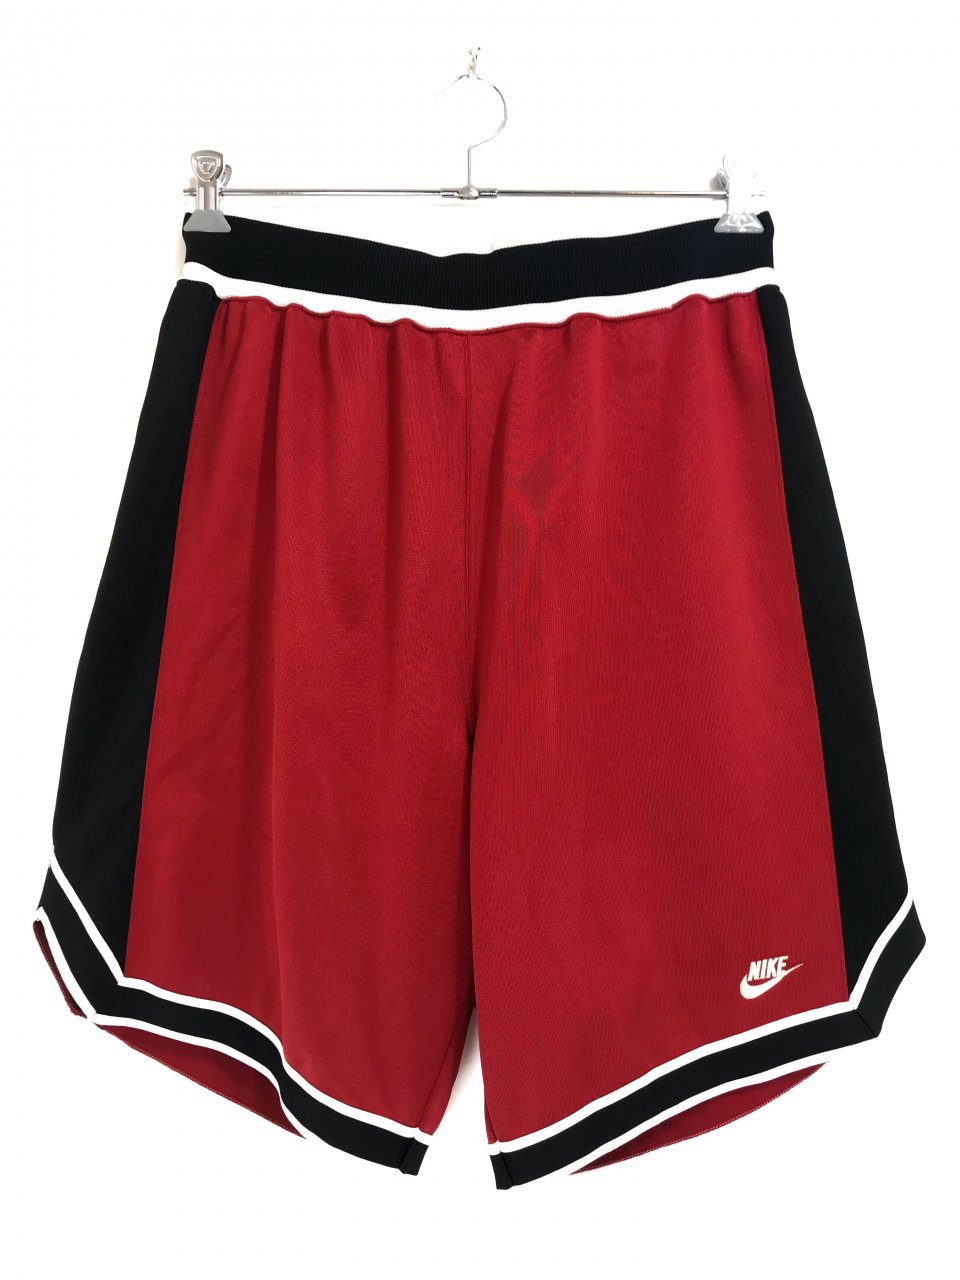 90s NIKE Game Shorts 赤黒白 XL 銀タグ ナイキ バスパン ショーツ ブルズカラー - NEWJOKE ONLINE STORE